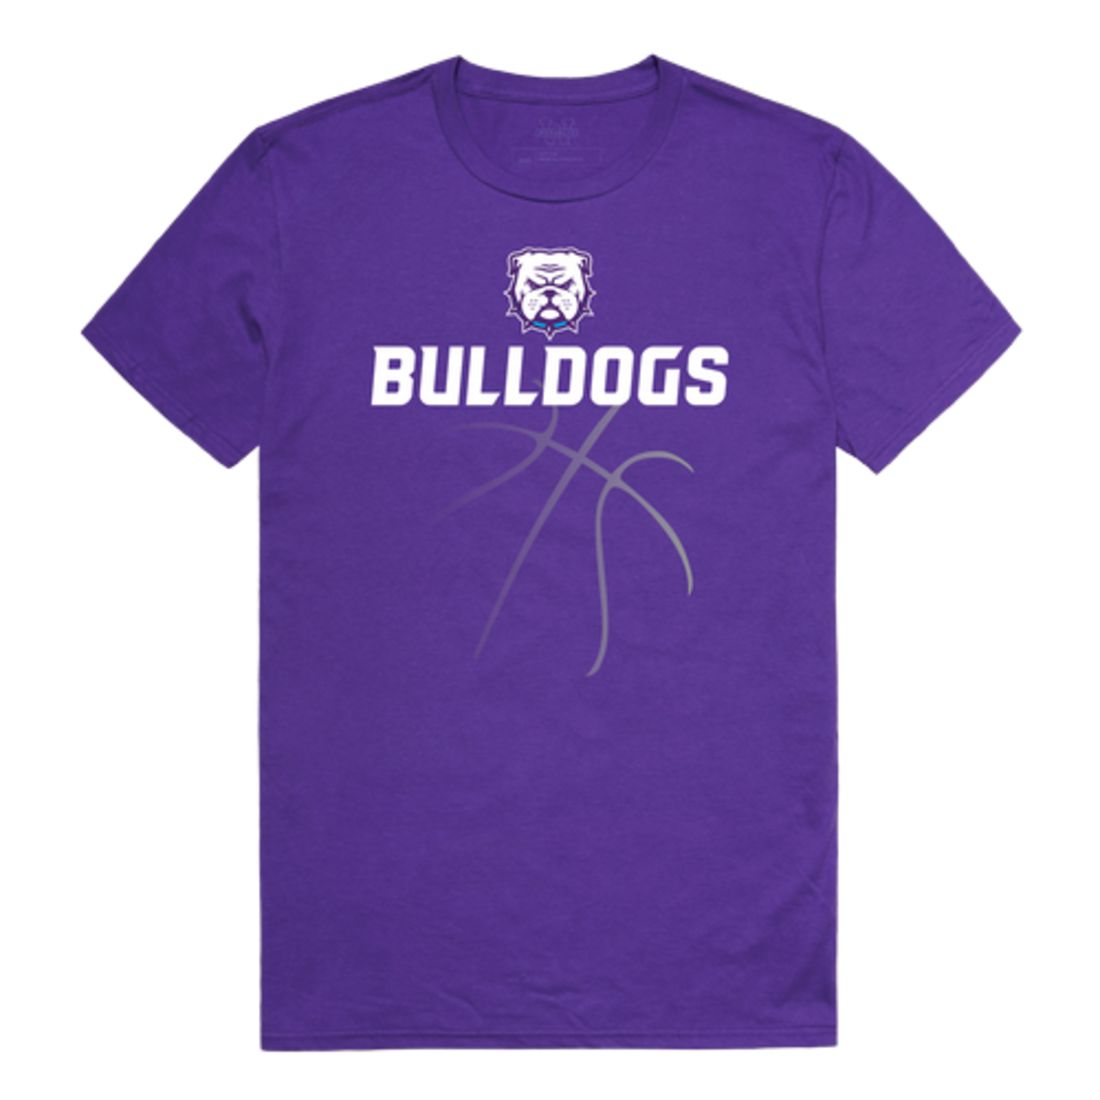 Truman State University Bulldogs Basketball T-Shirt Tee